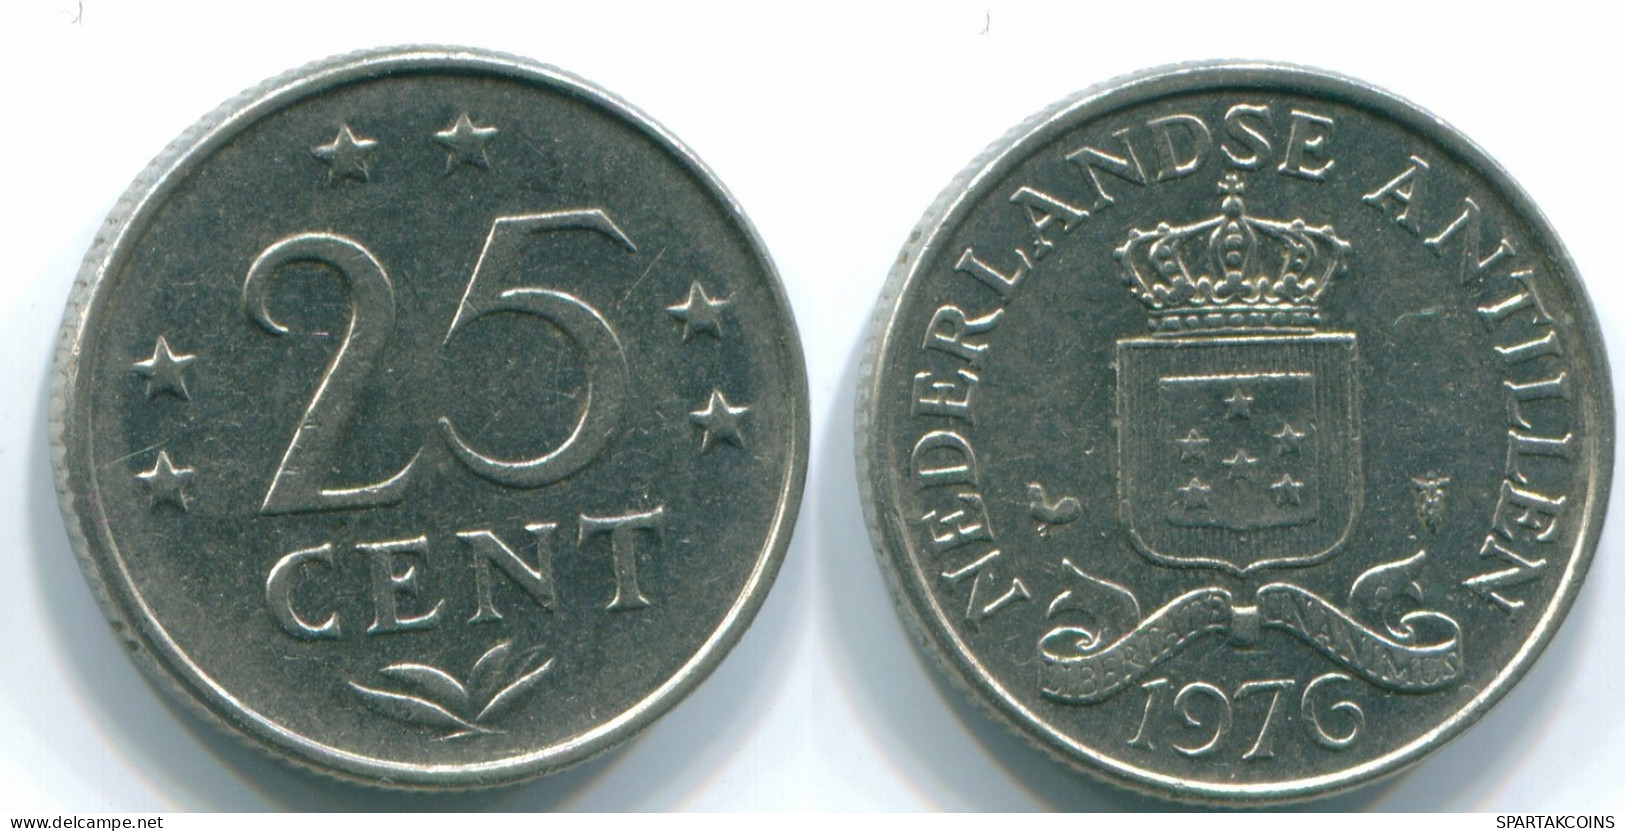 25 CENTS 1976 NIEDERLÄNDISCHE ANTILLEN Nickel Koloniale Münze #S11641.D.A - Netherlands Antilles